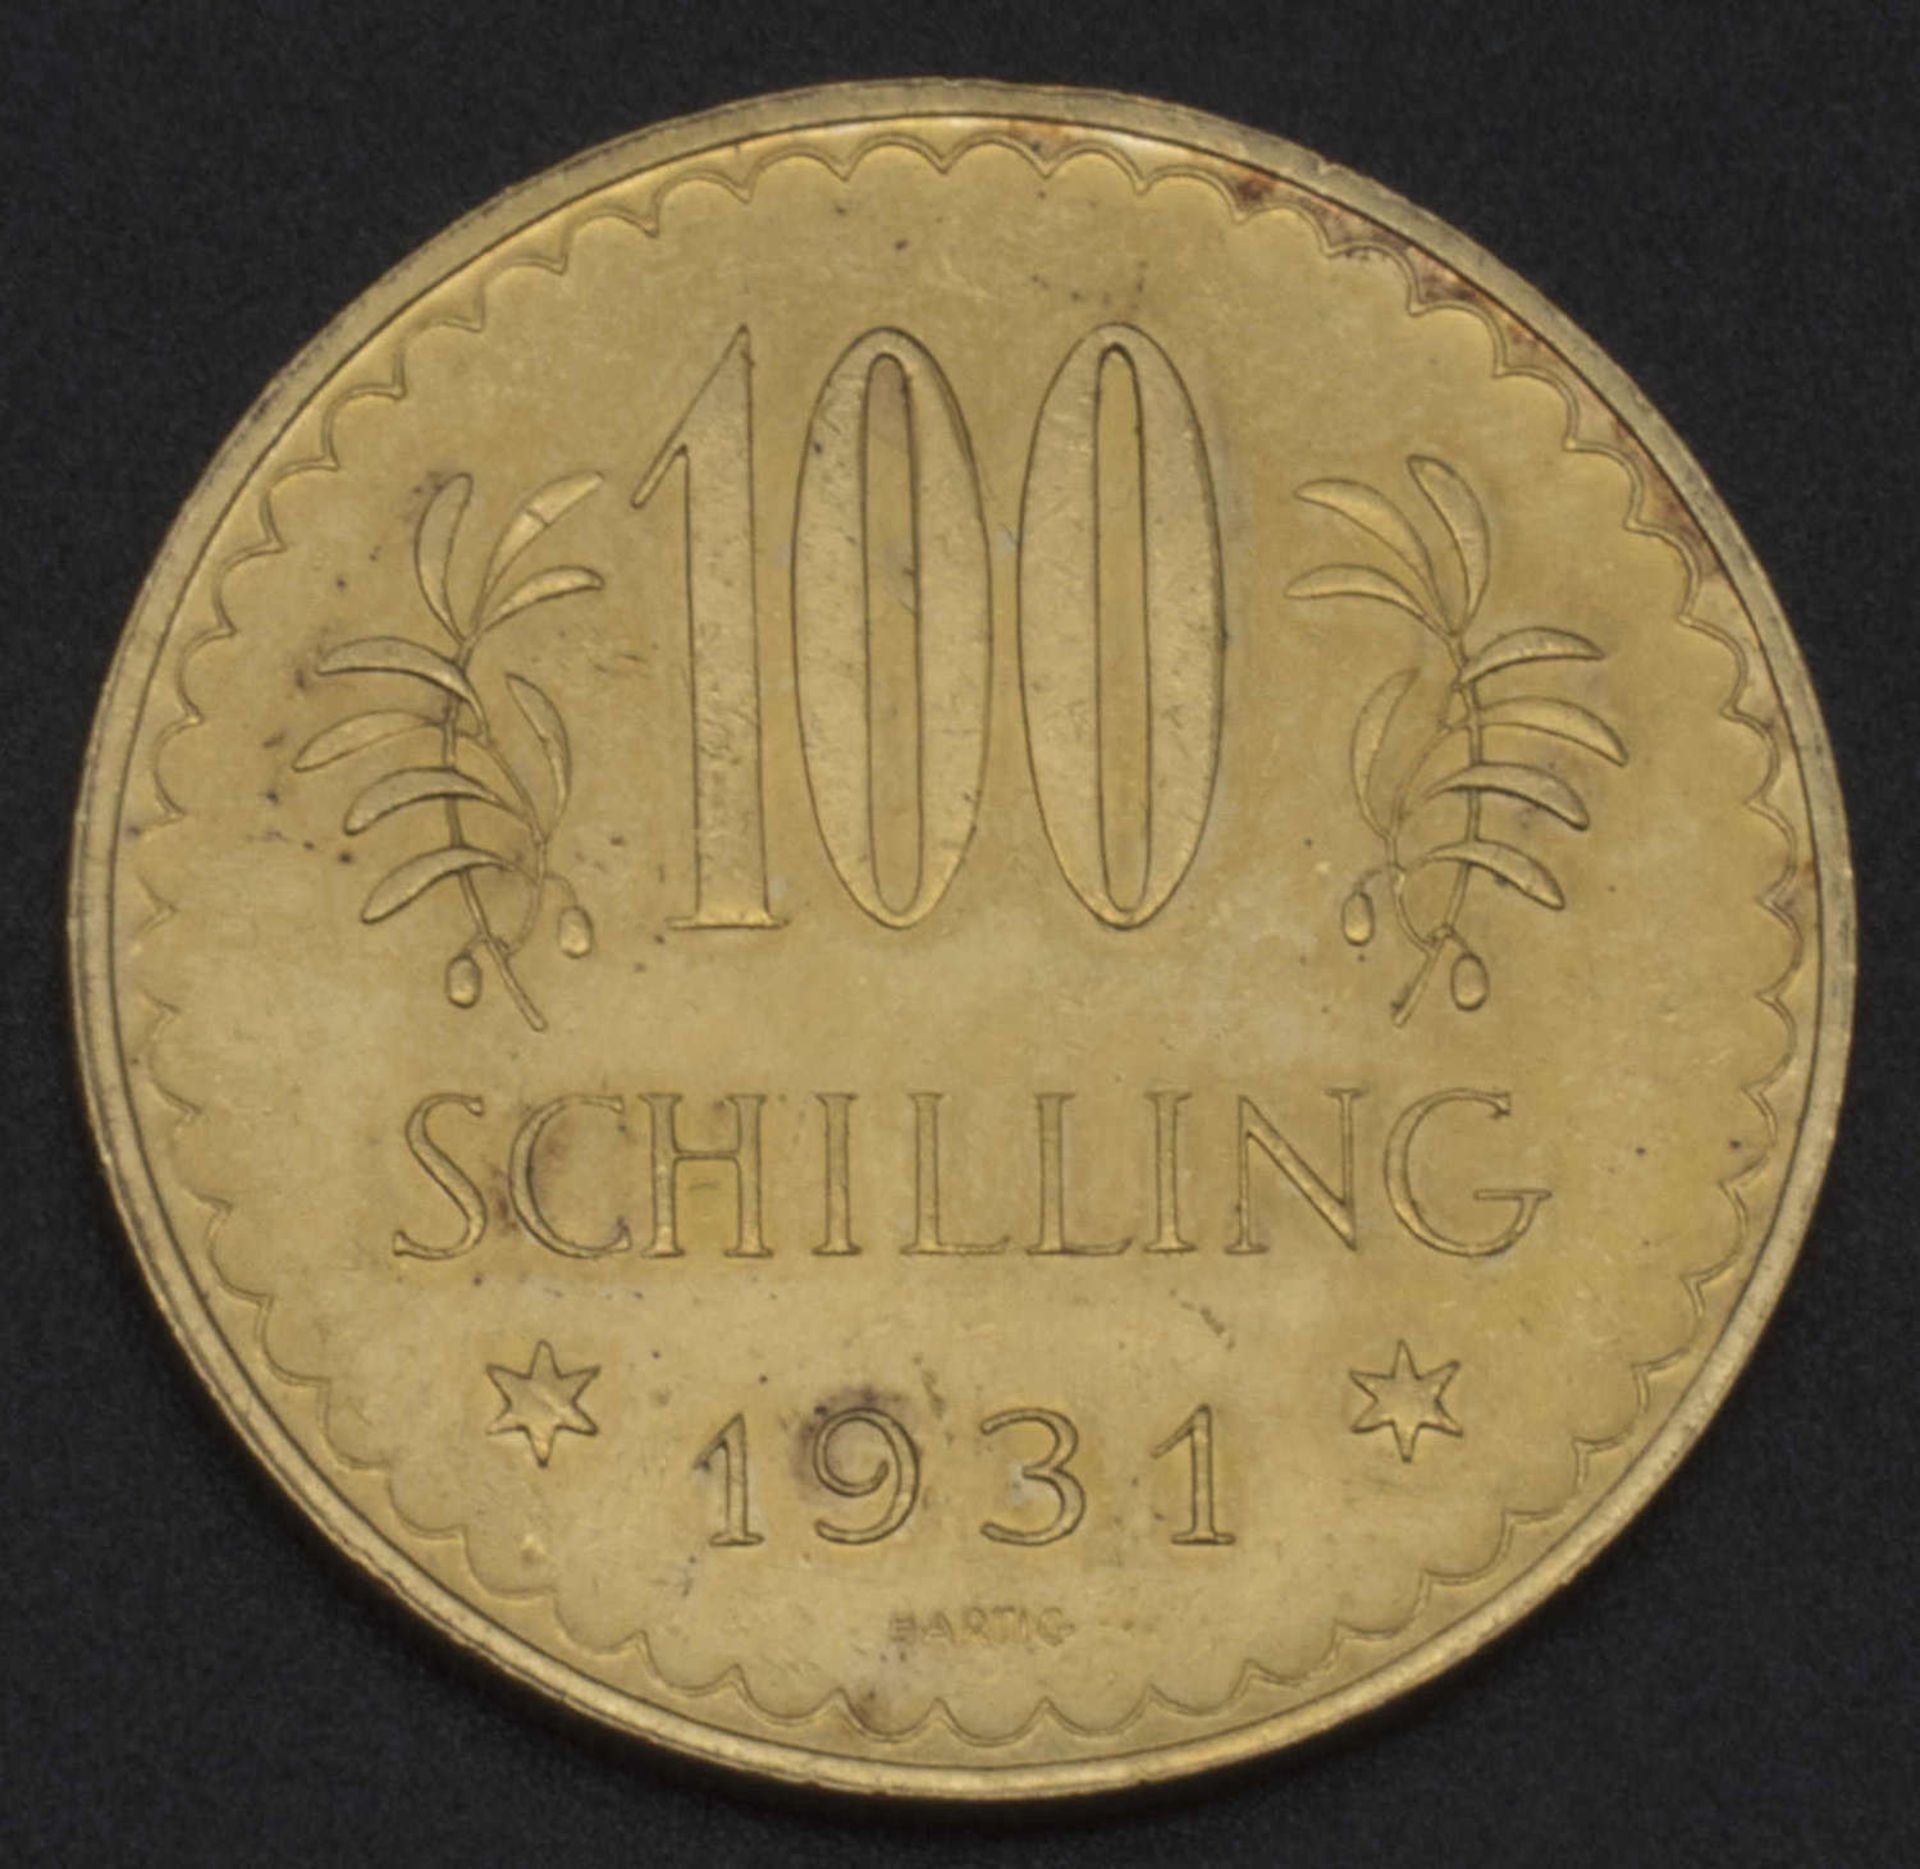 Austria Republic, 100 shillings gold coin 1931. condition vz